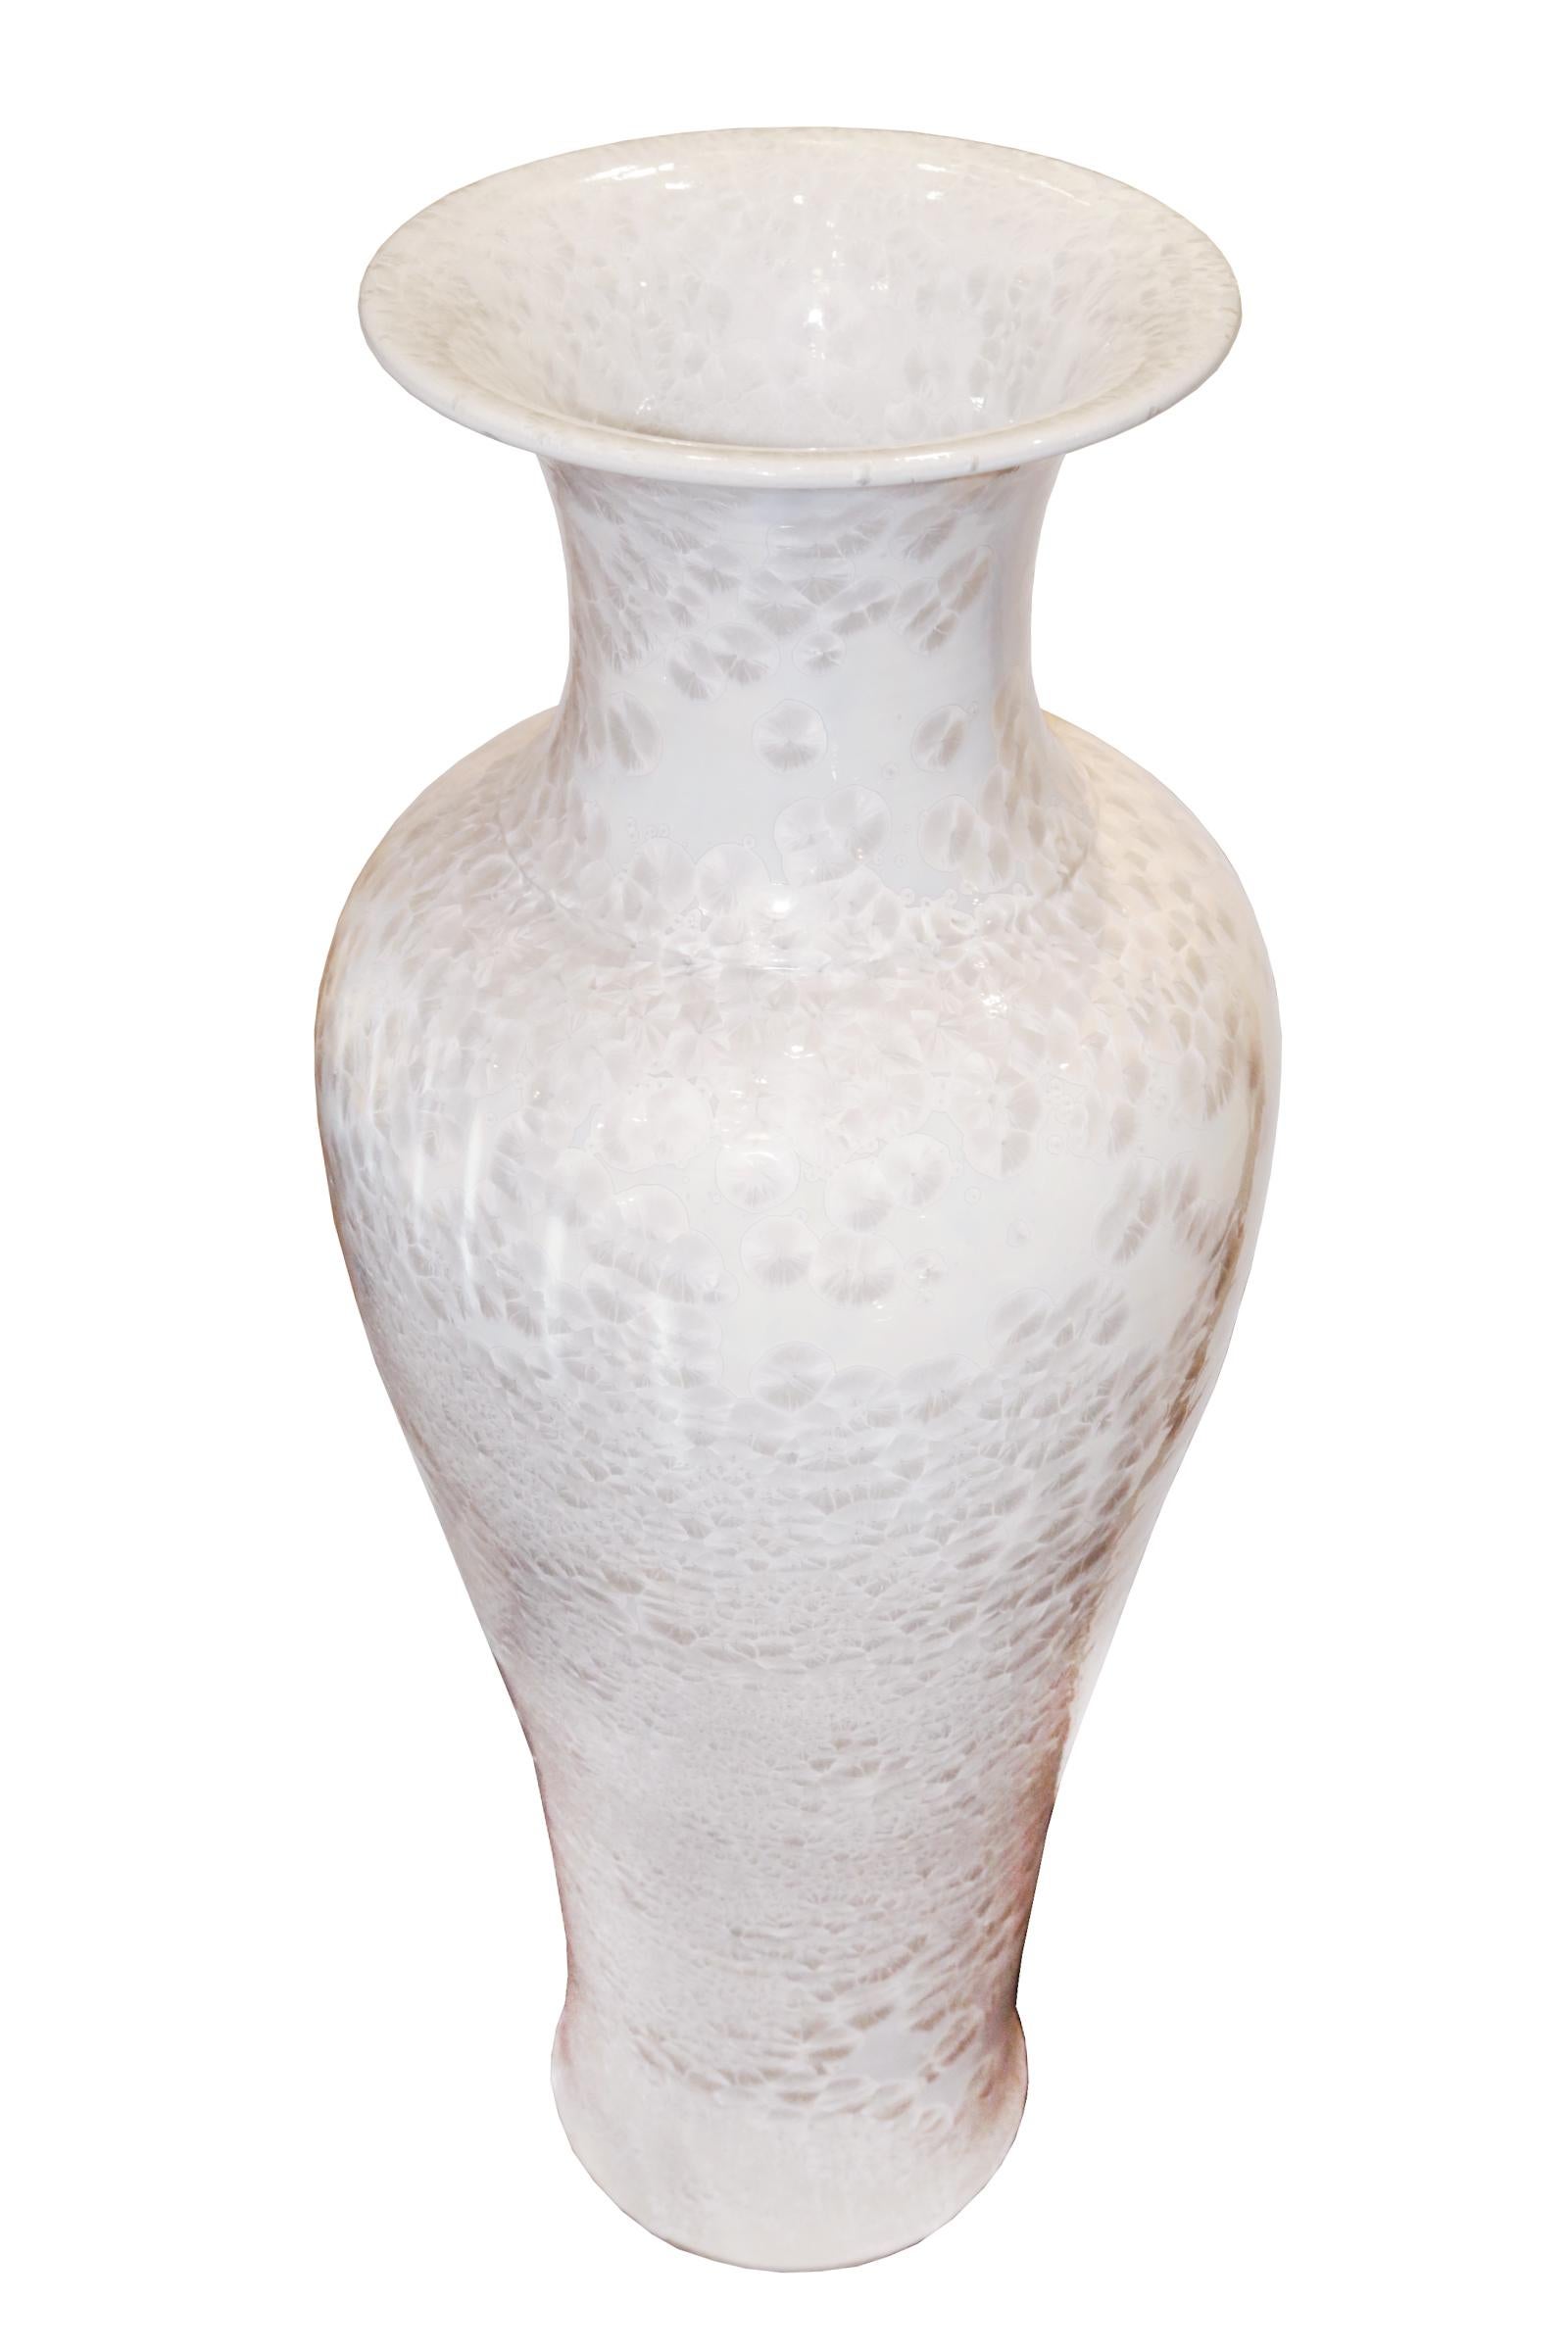 Vase nacre white medium
In lacquered porcelain.